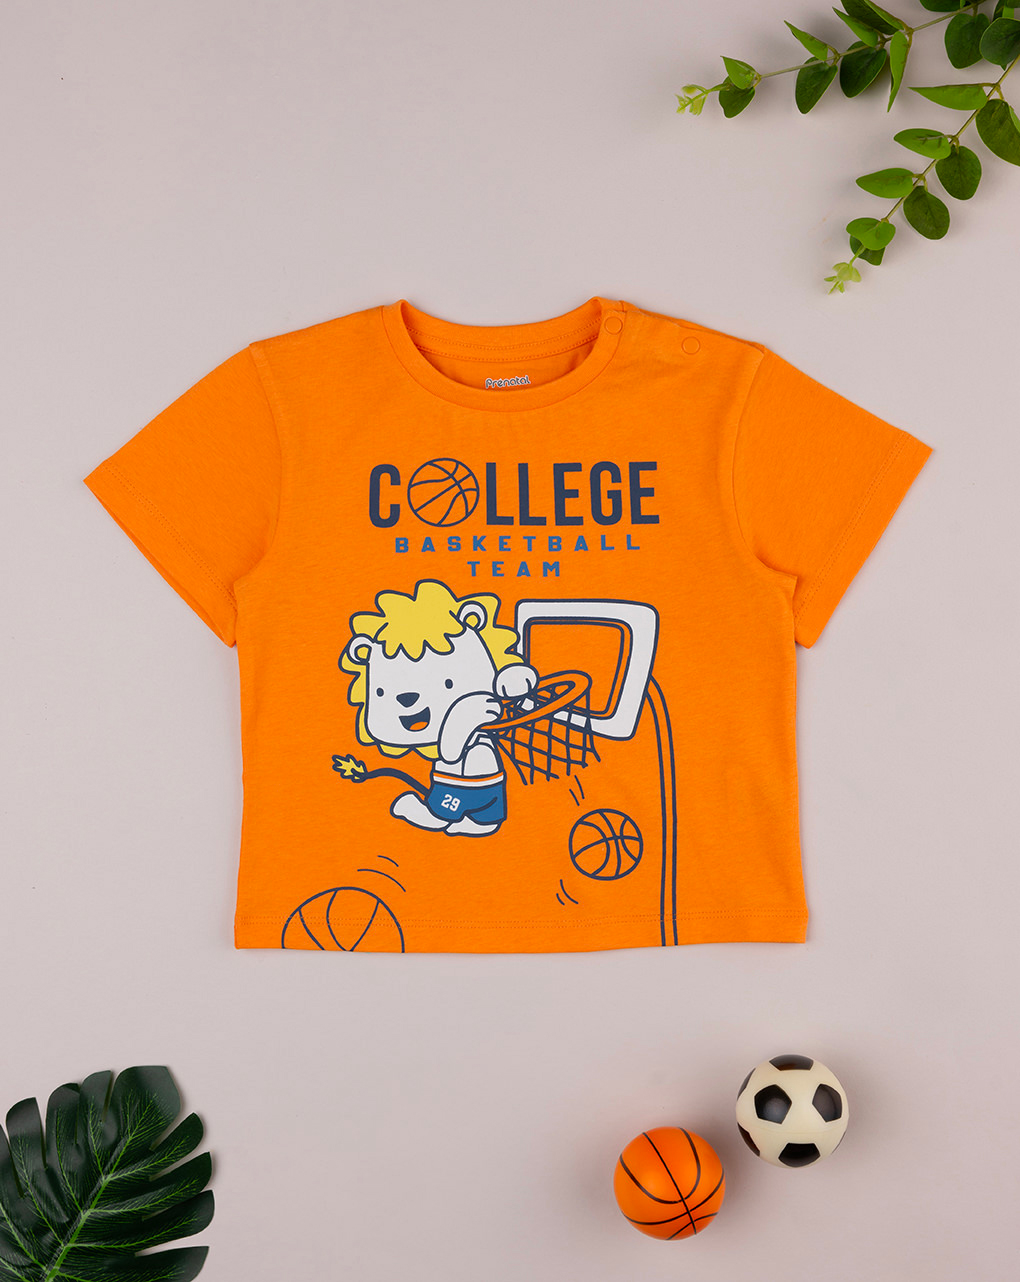 T-shirt bimbo arancione - Prénatal